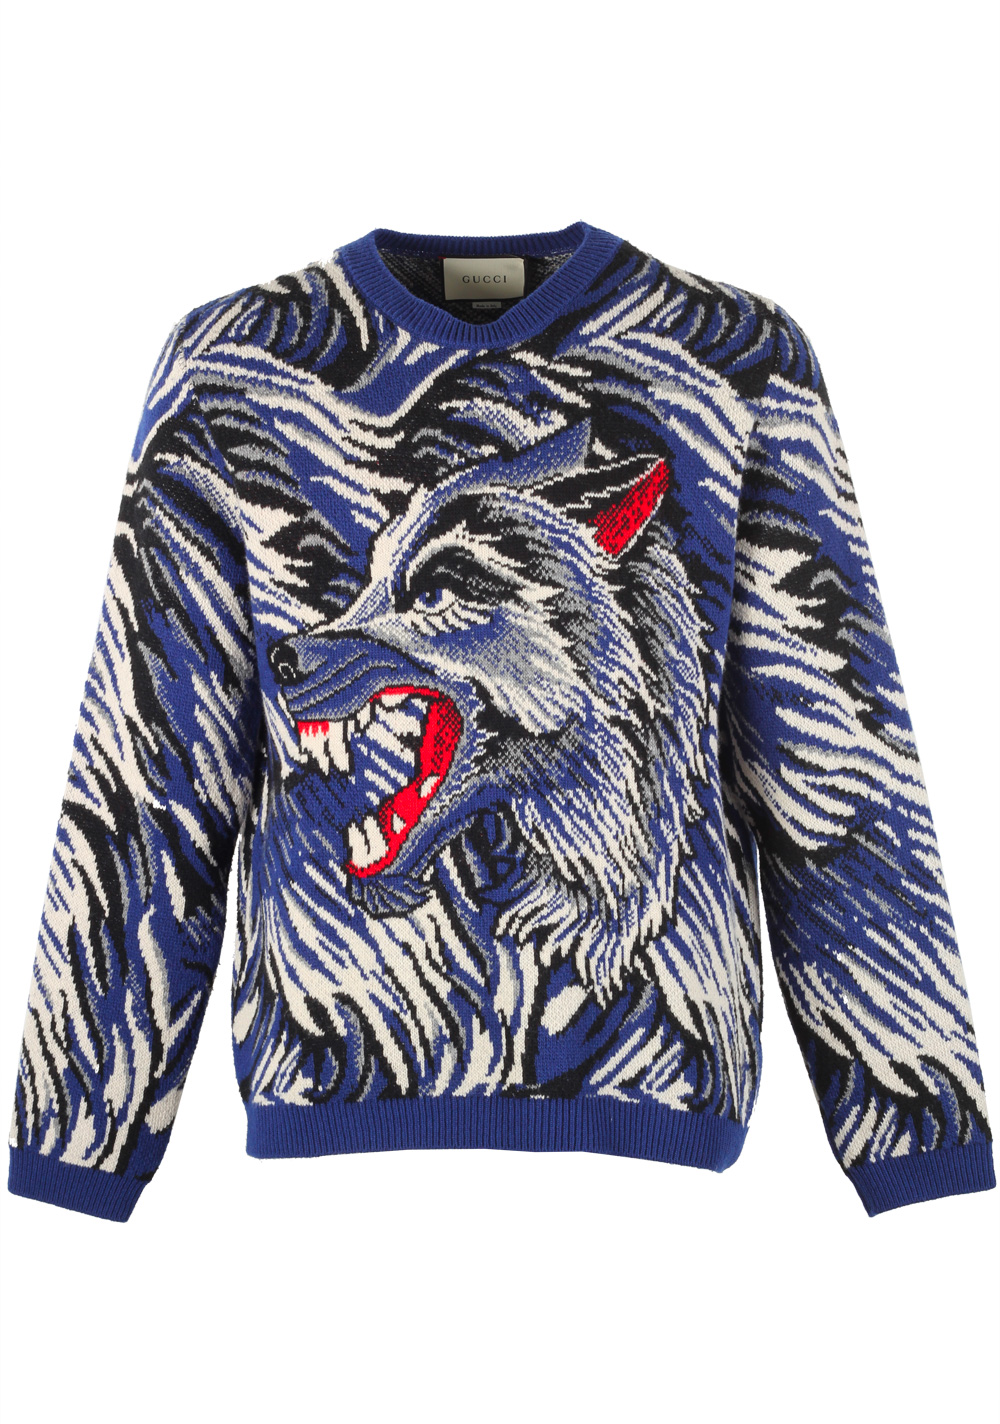 gucci wolf sweater